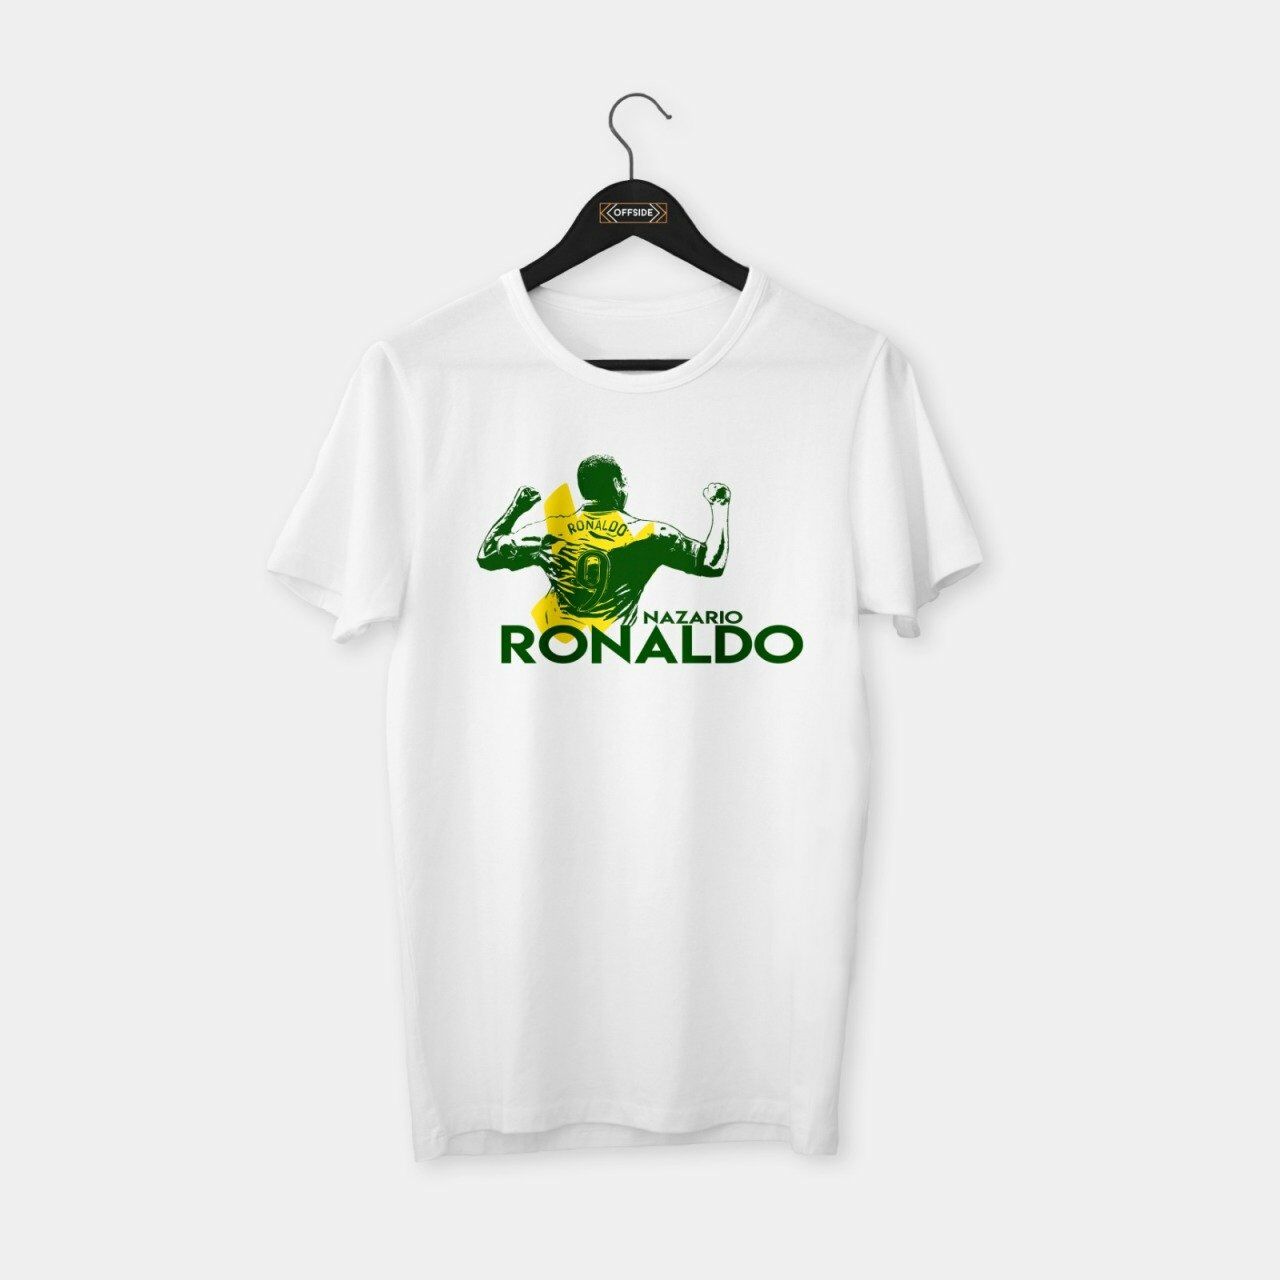 Ronaldo T-shirt